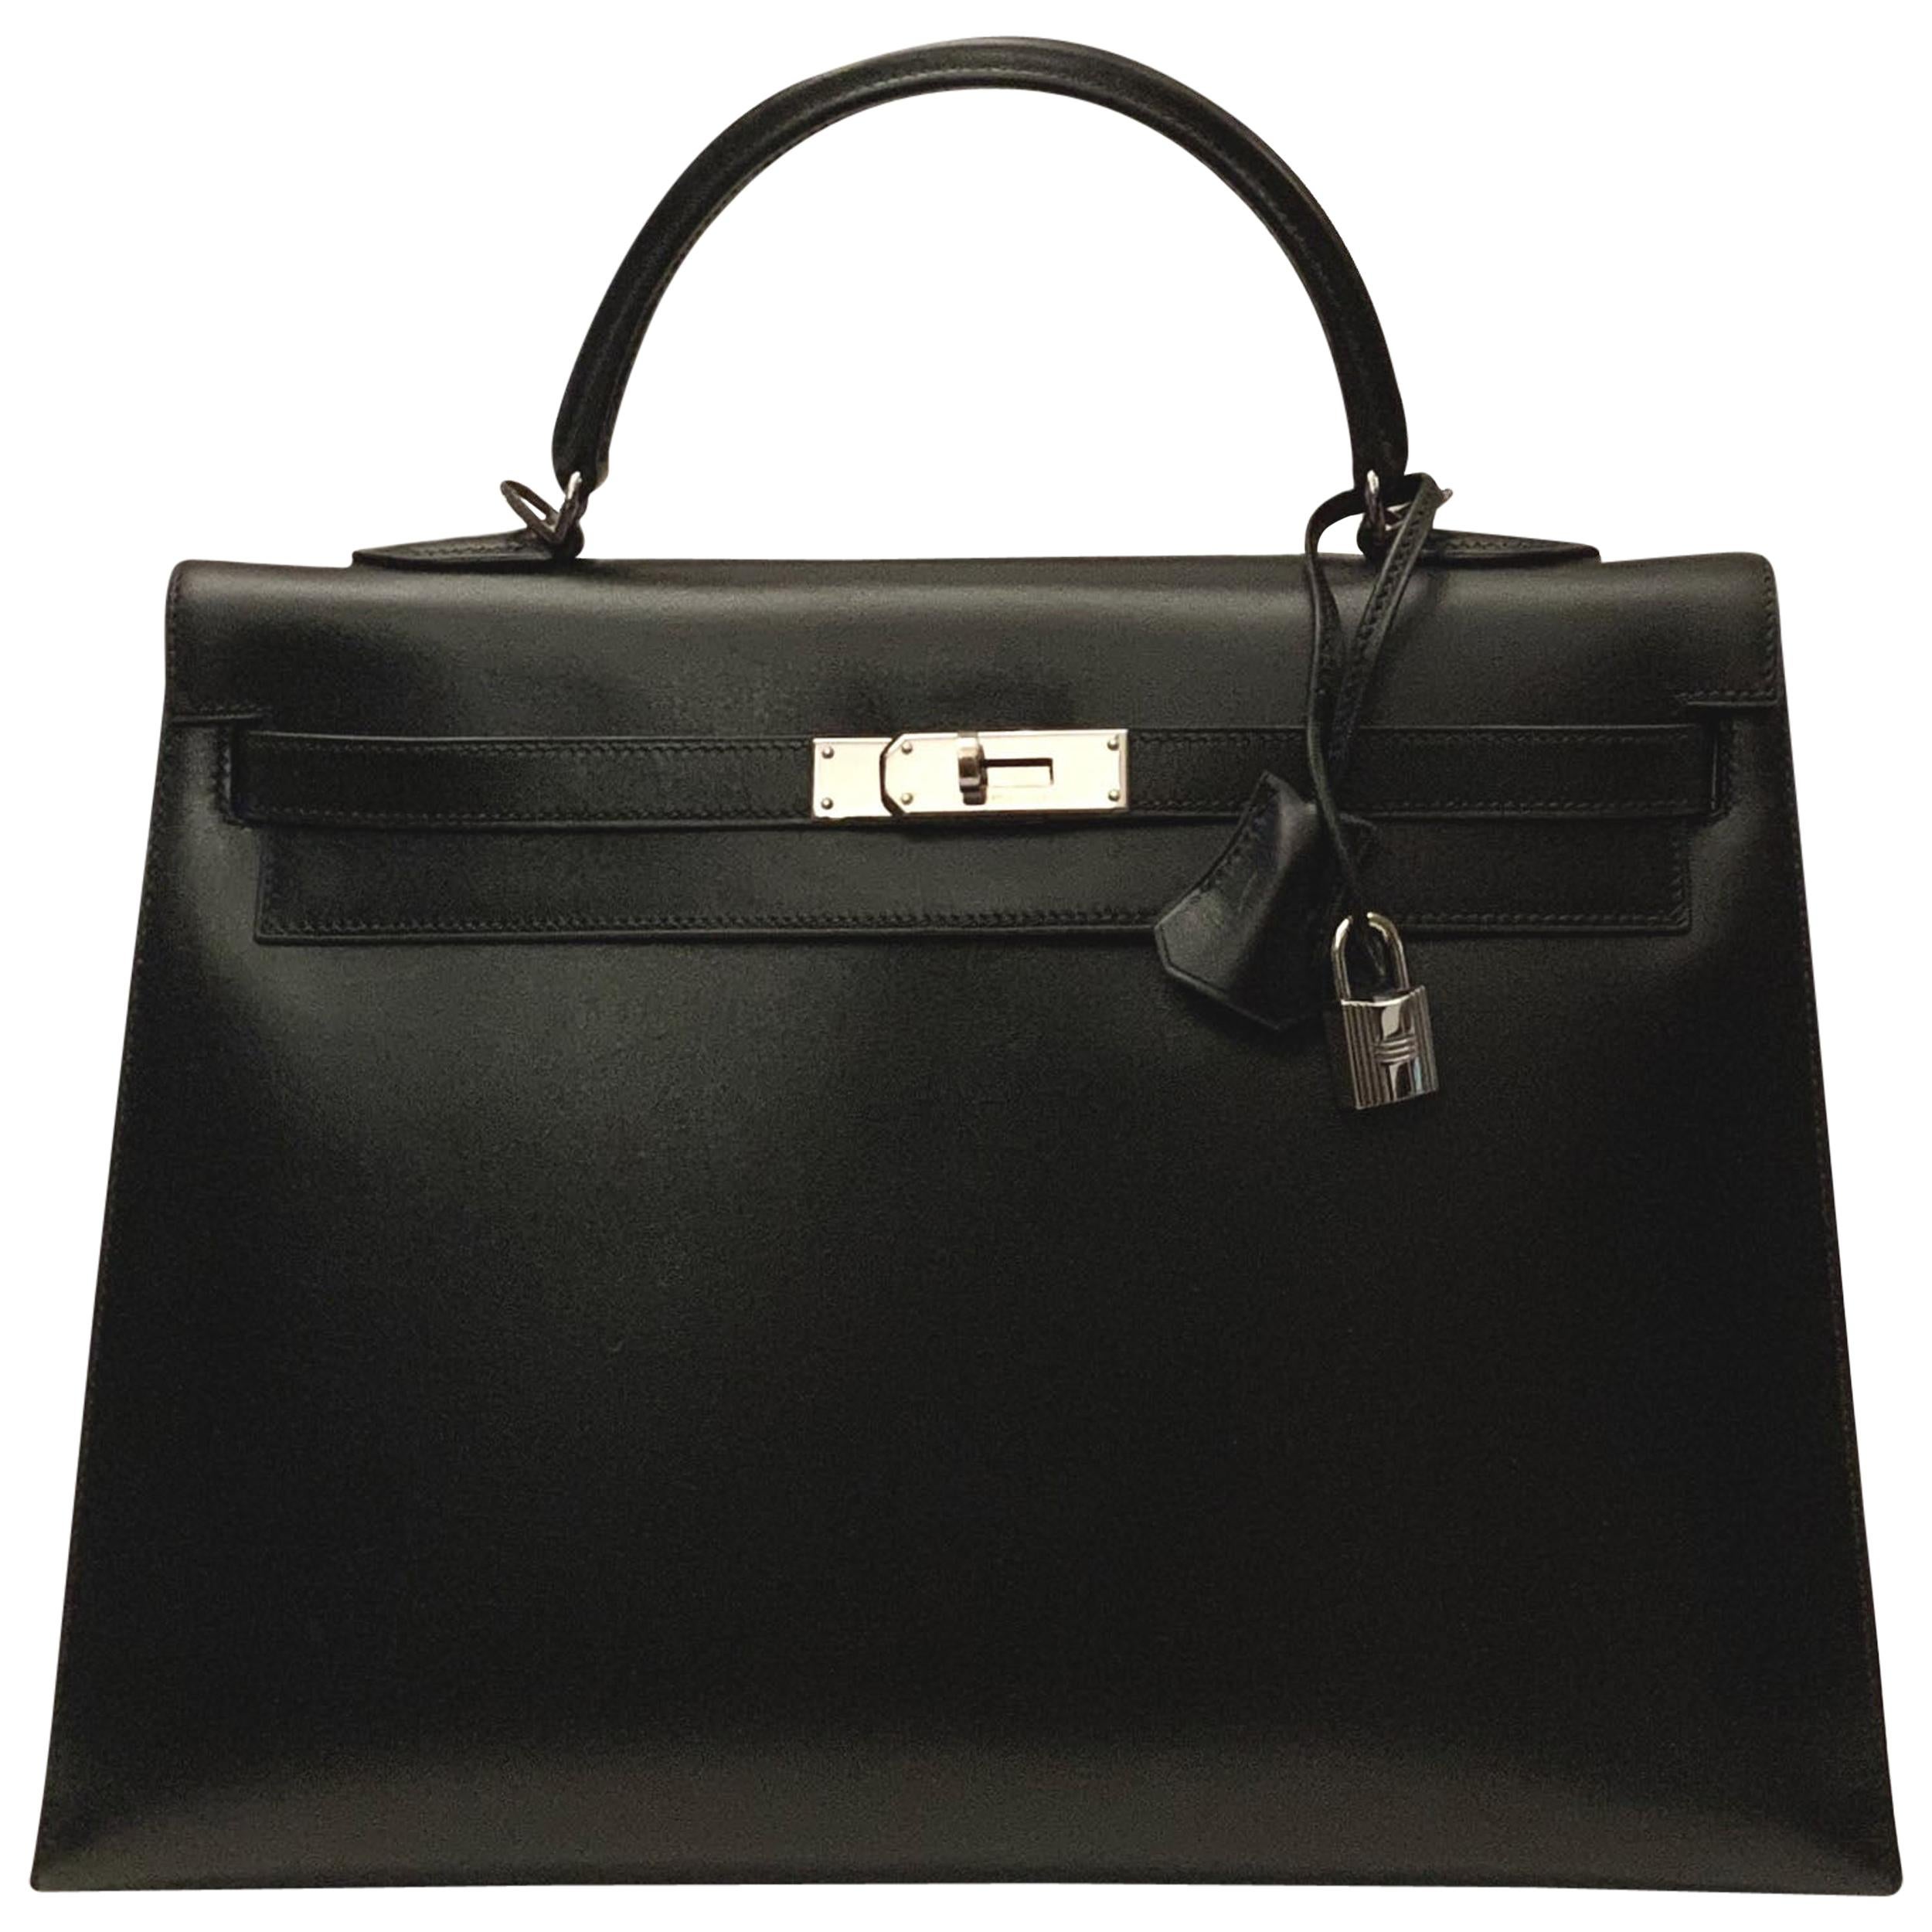 Hermès Kelly Sellier 35 Black Box Leather Bag